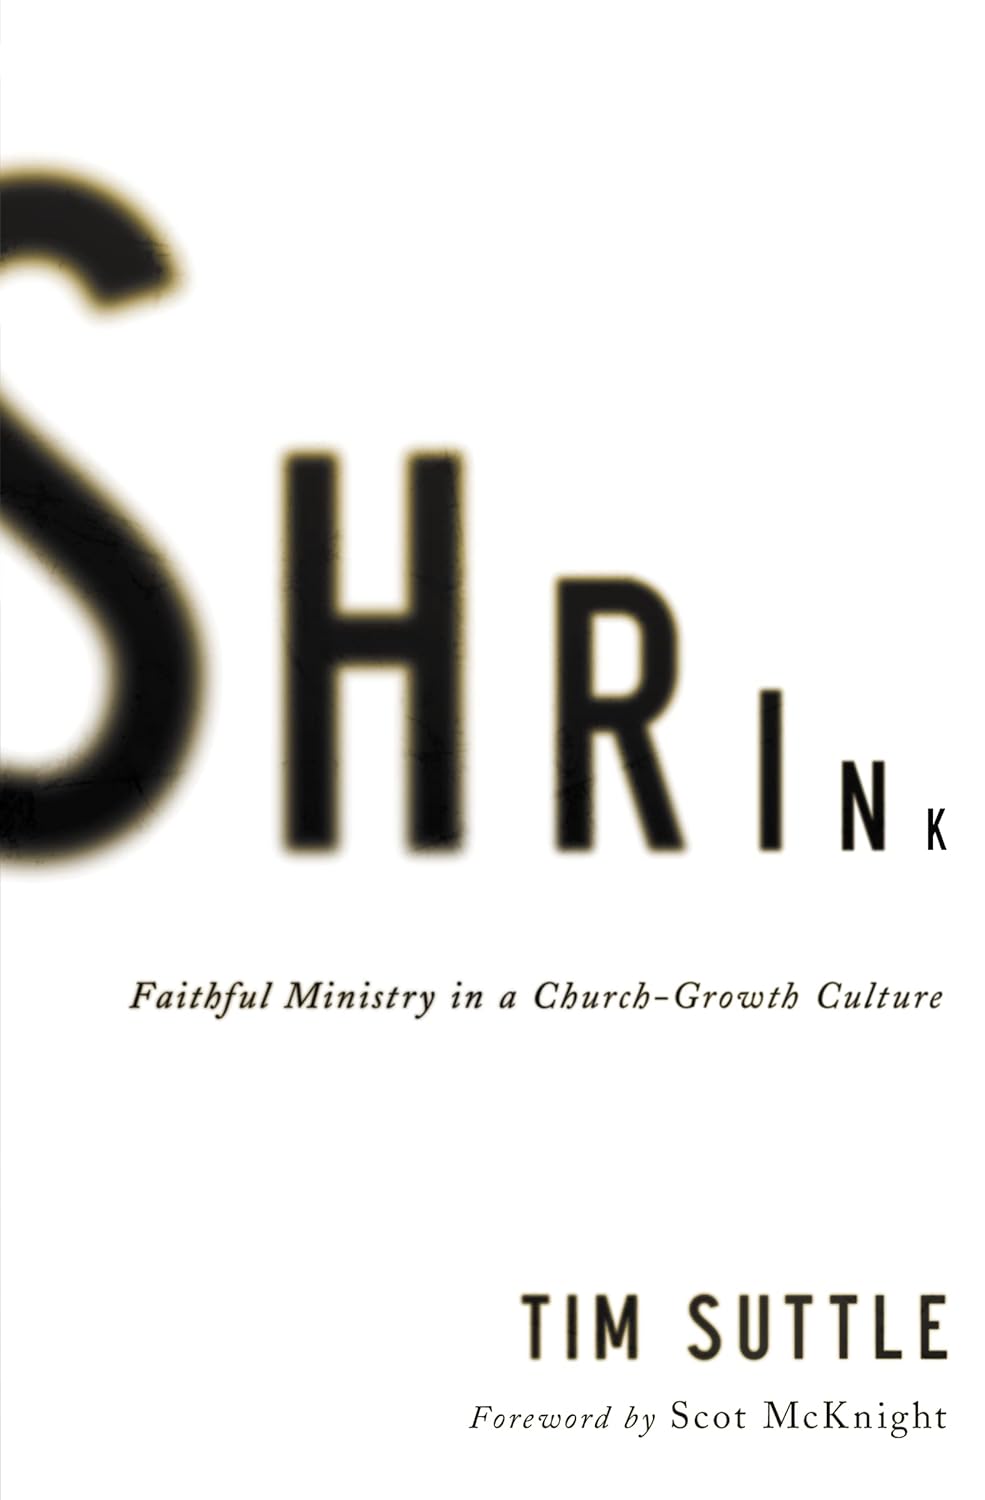 Shrink: Faithful Ministry in a Church Growth Culture - Tim Suttle